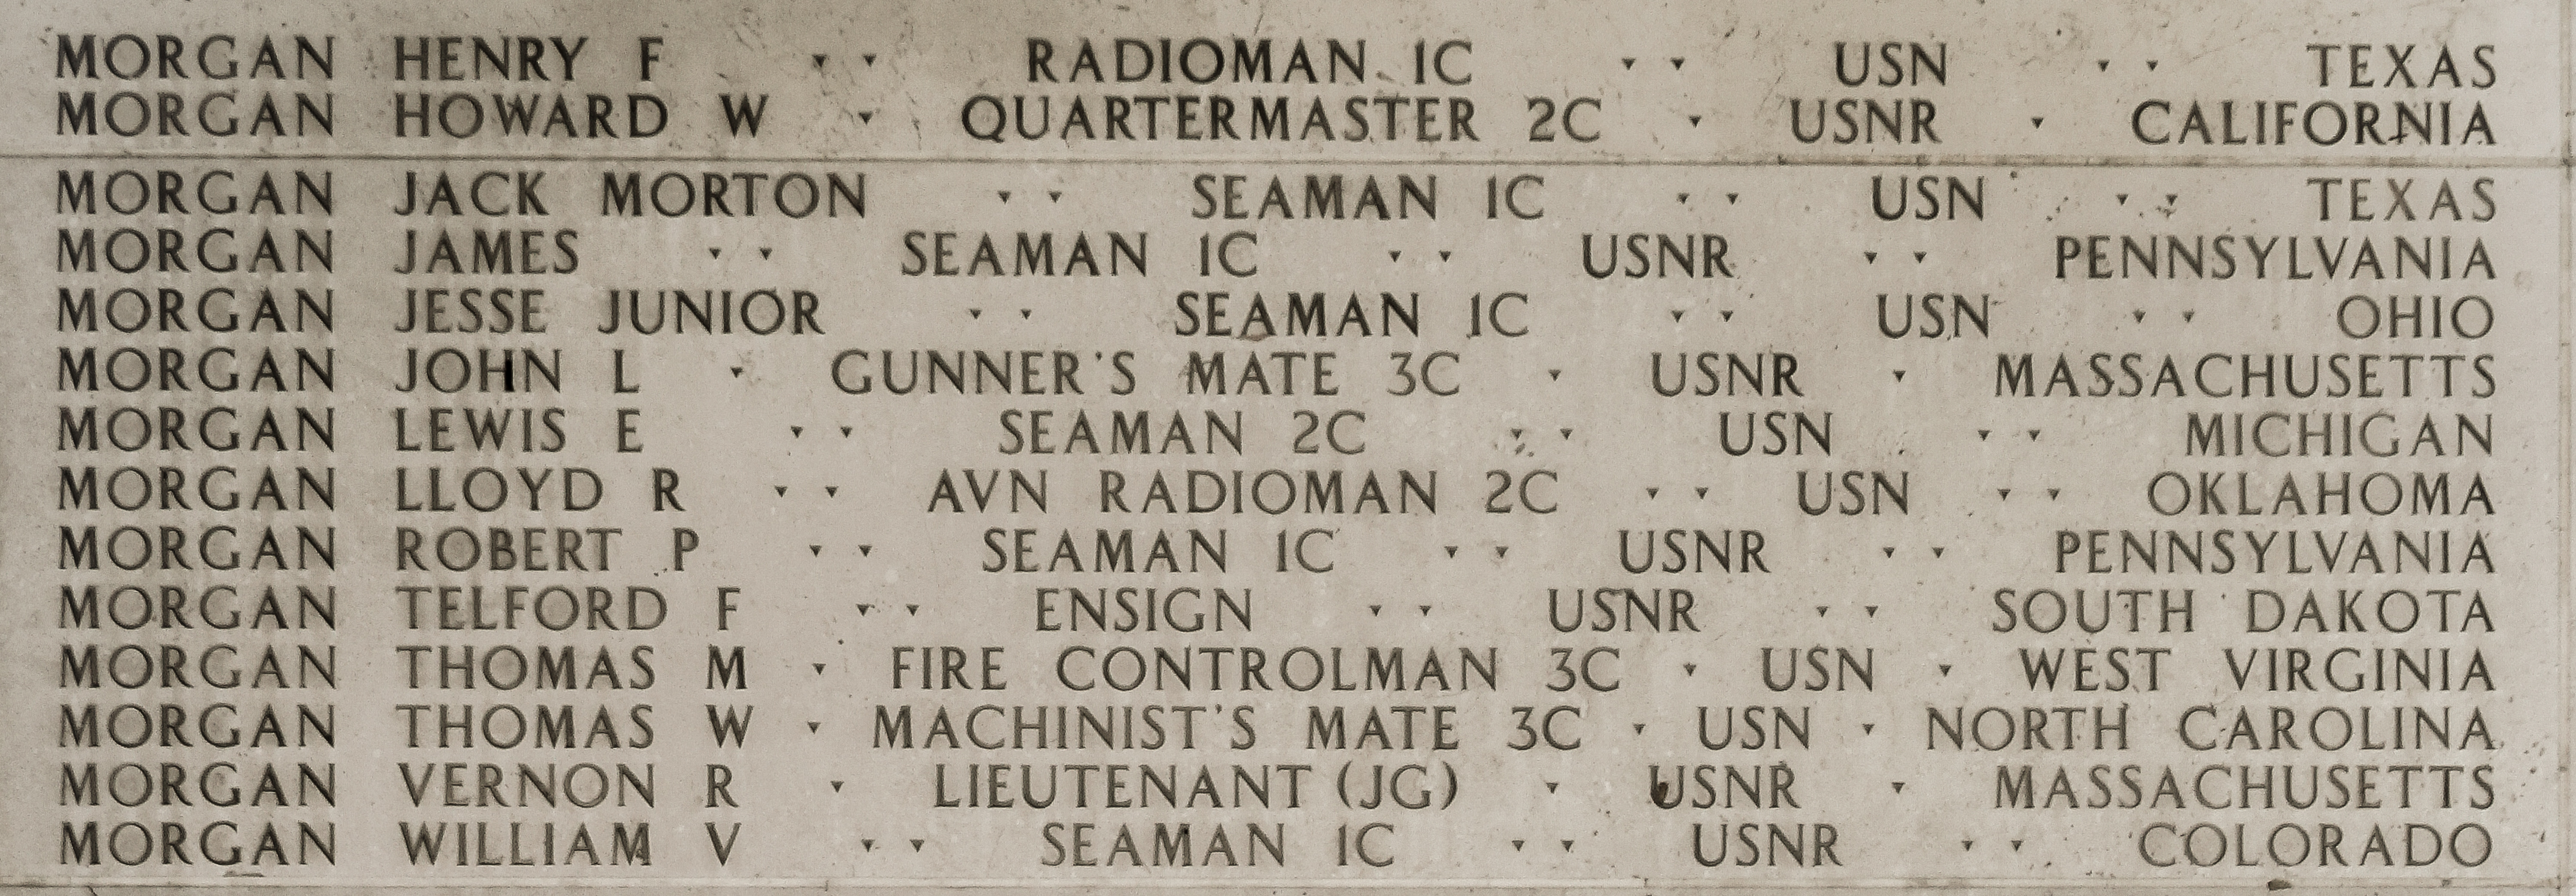 Henry F. Morgan, Radioman First Class